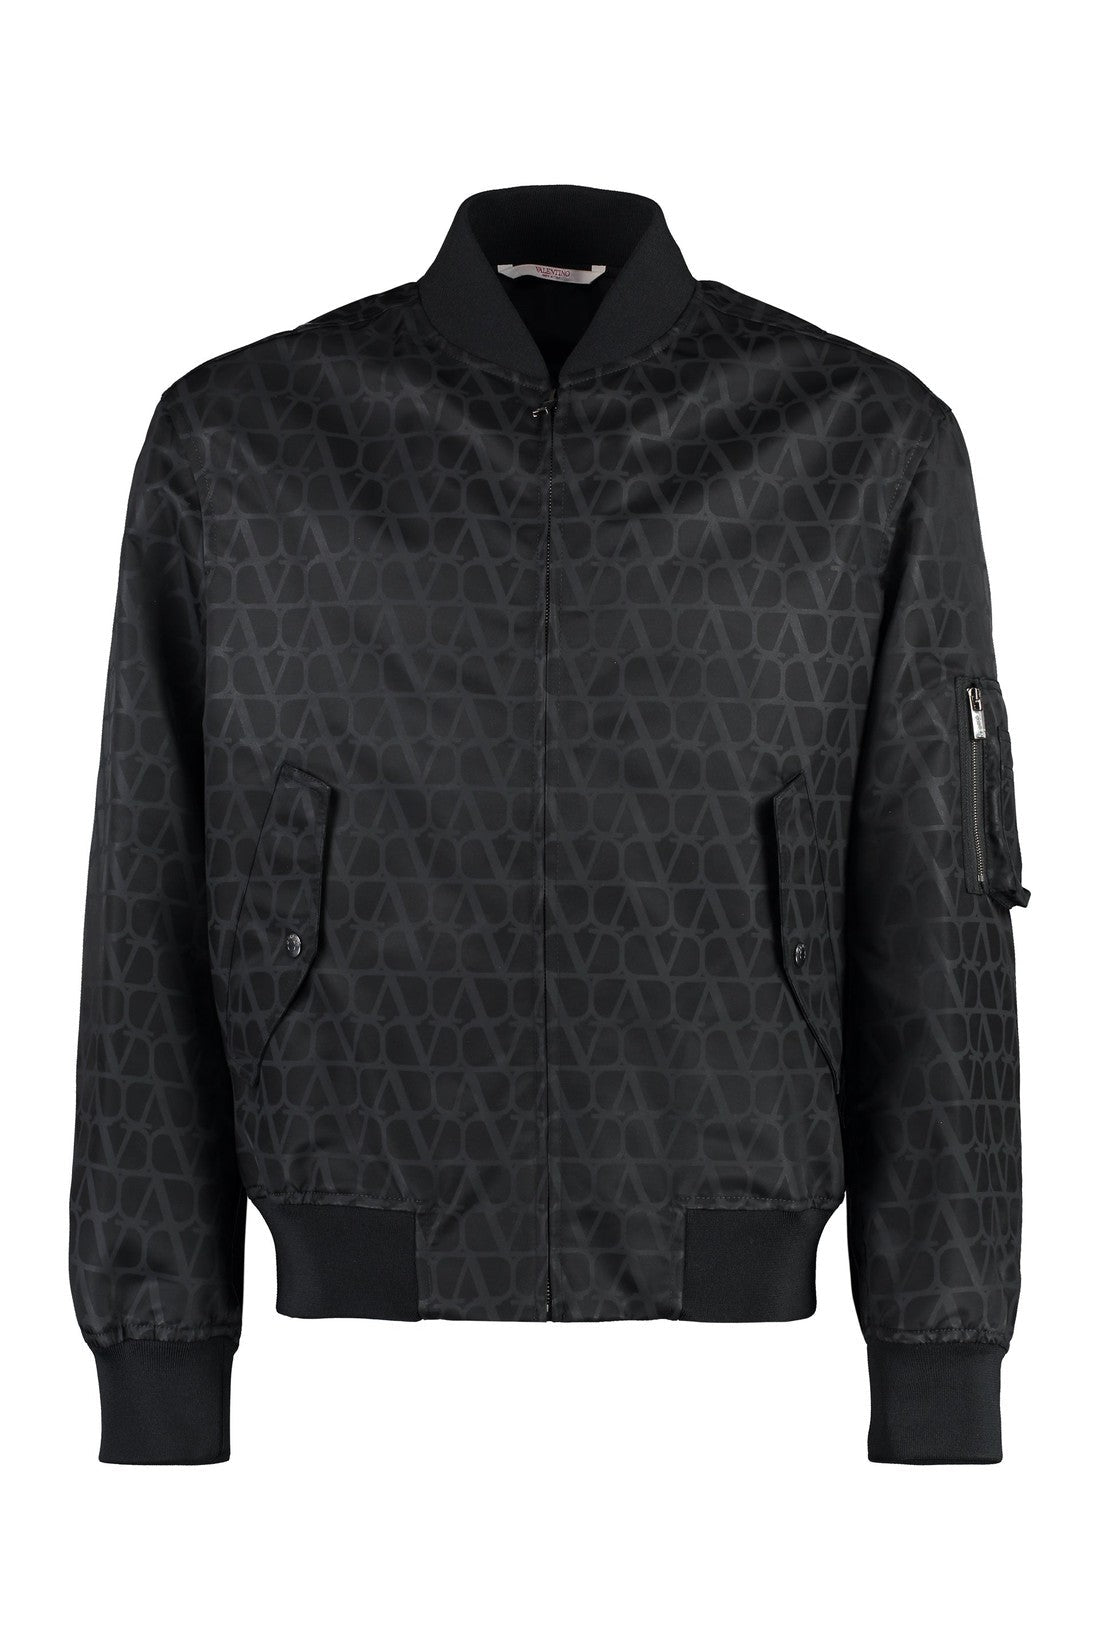 Valentino-OUTLET-SALE-Nylon bomber jacket-ARCHIVIST